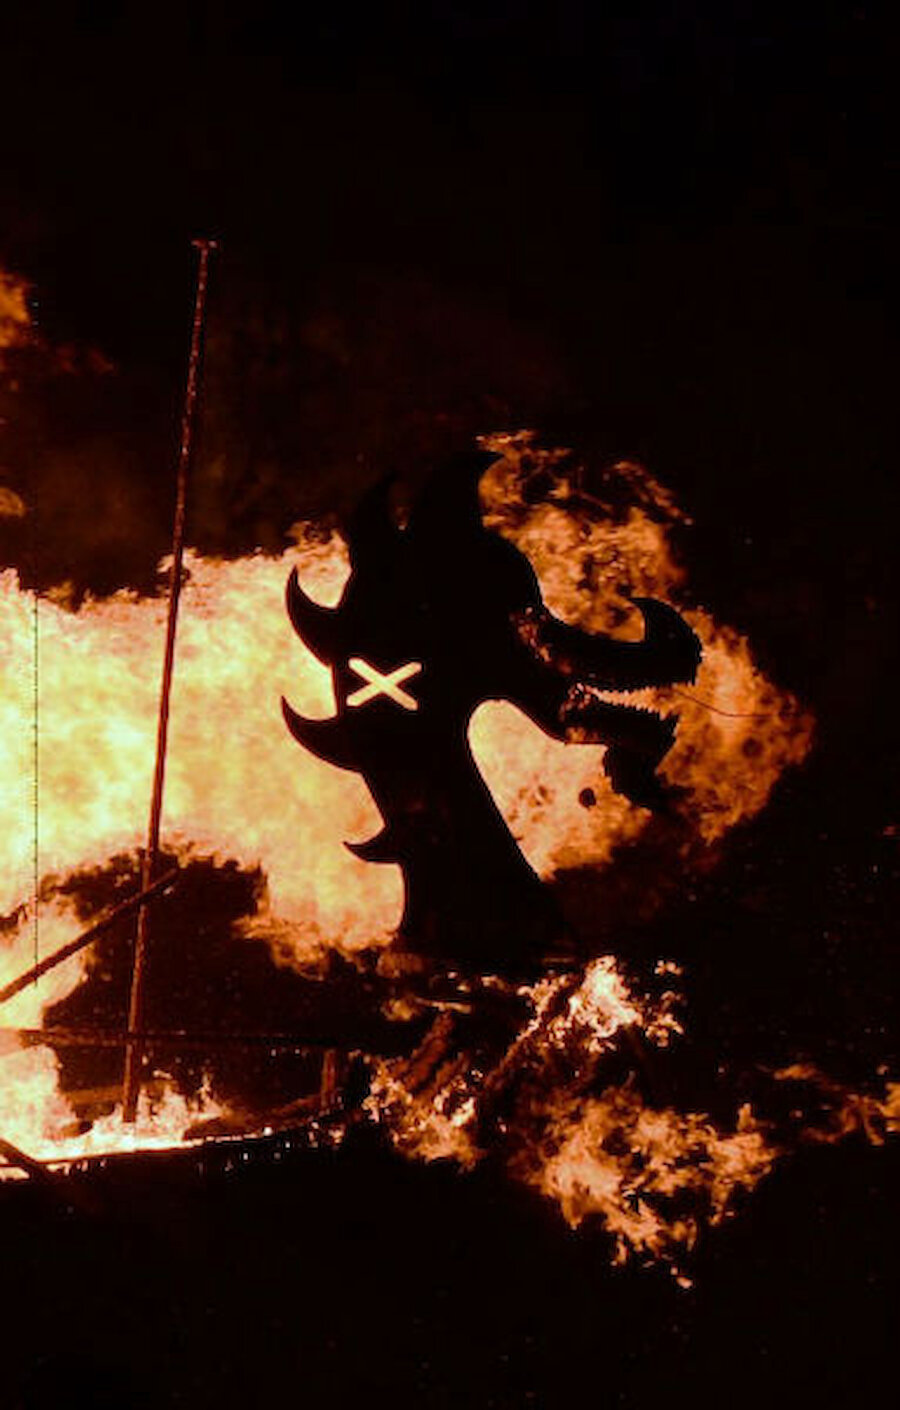 A Scottish saltire is revealed as the dragon head burns (Courtesy Alastair Hamilton)